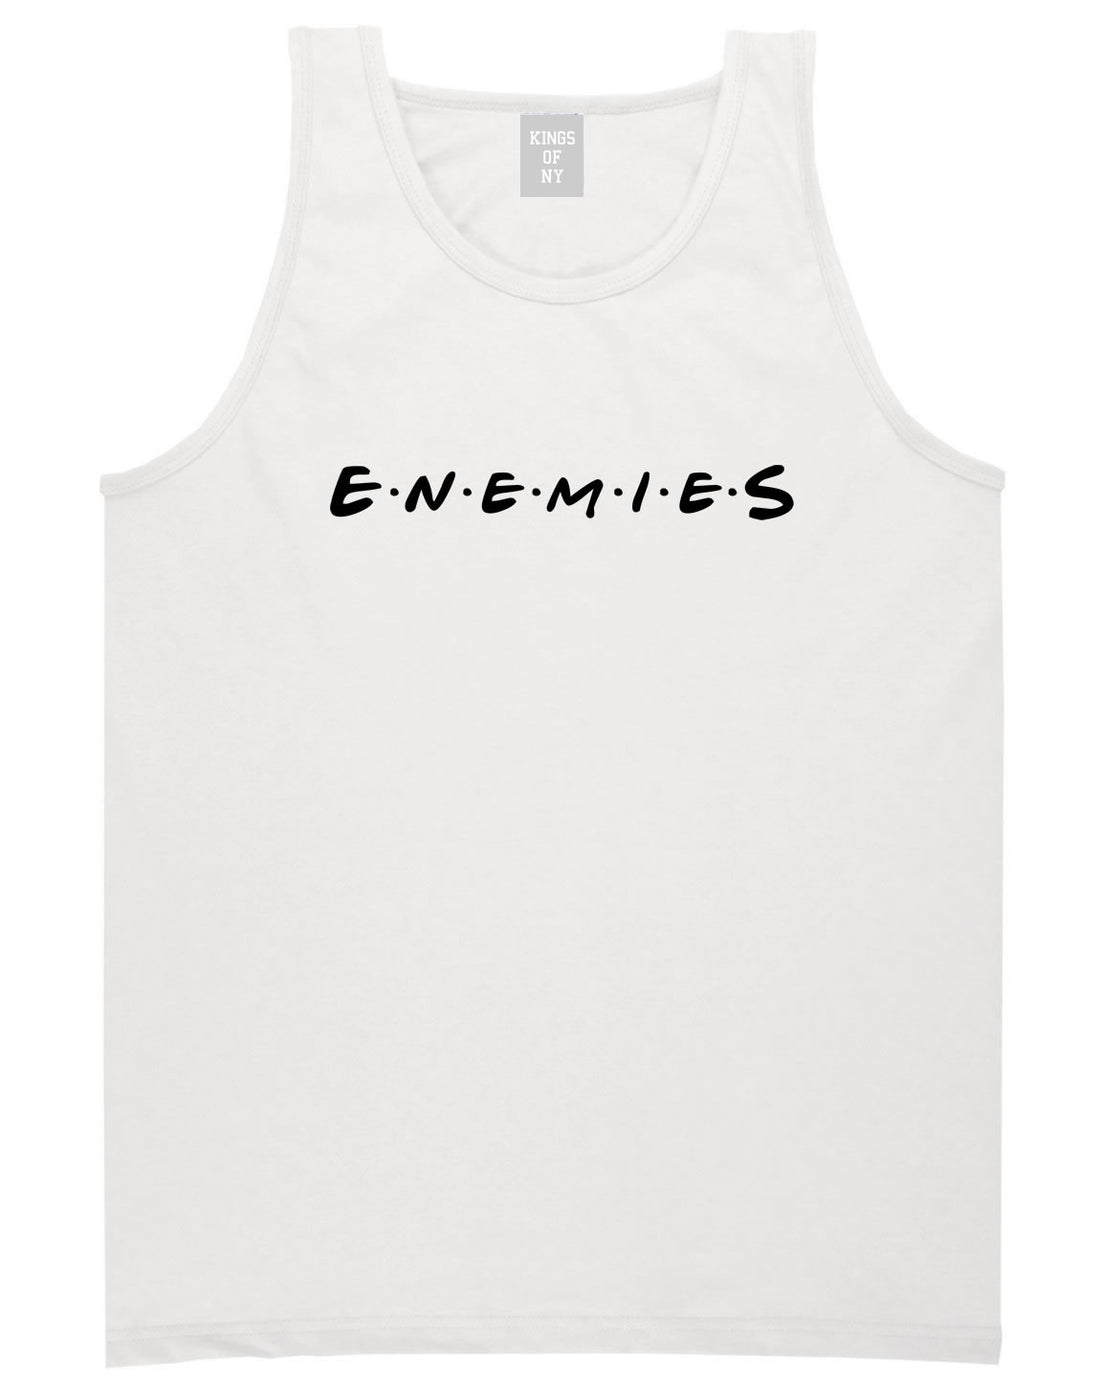 Enemies Friends Parody Tank Top in White By Kings Of NY